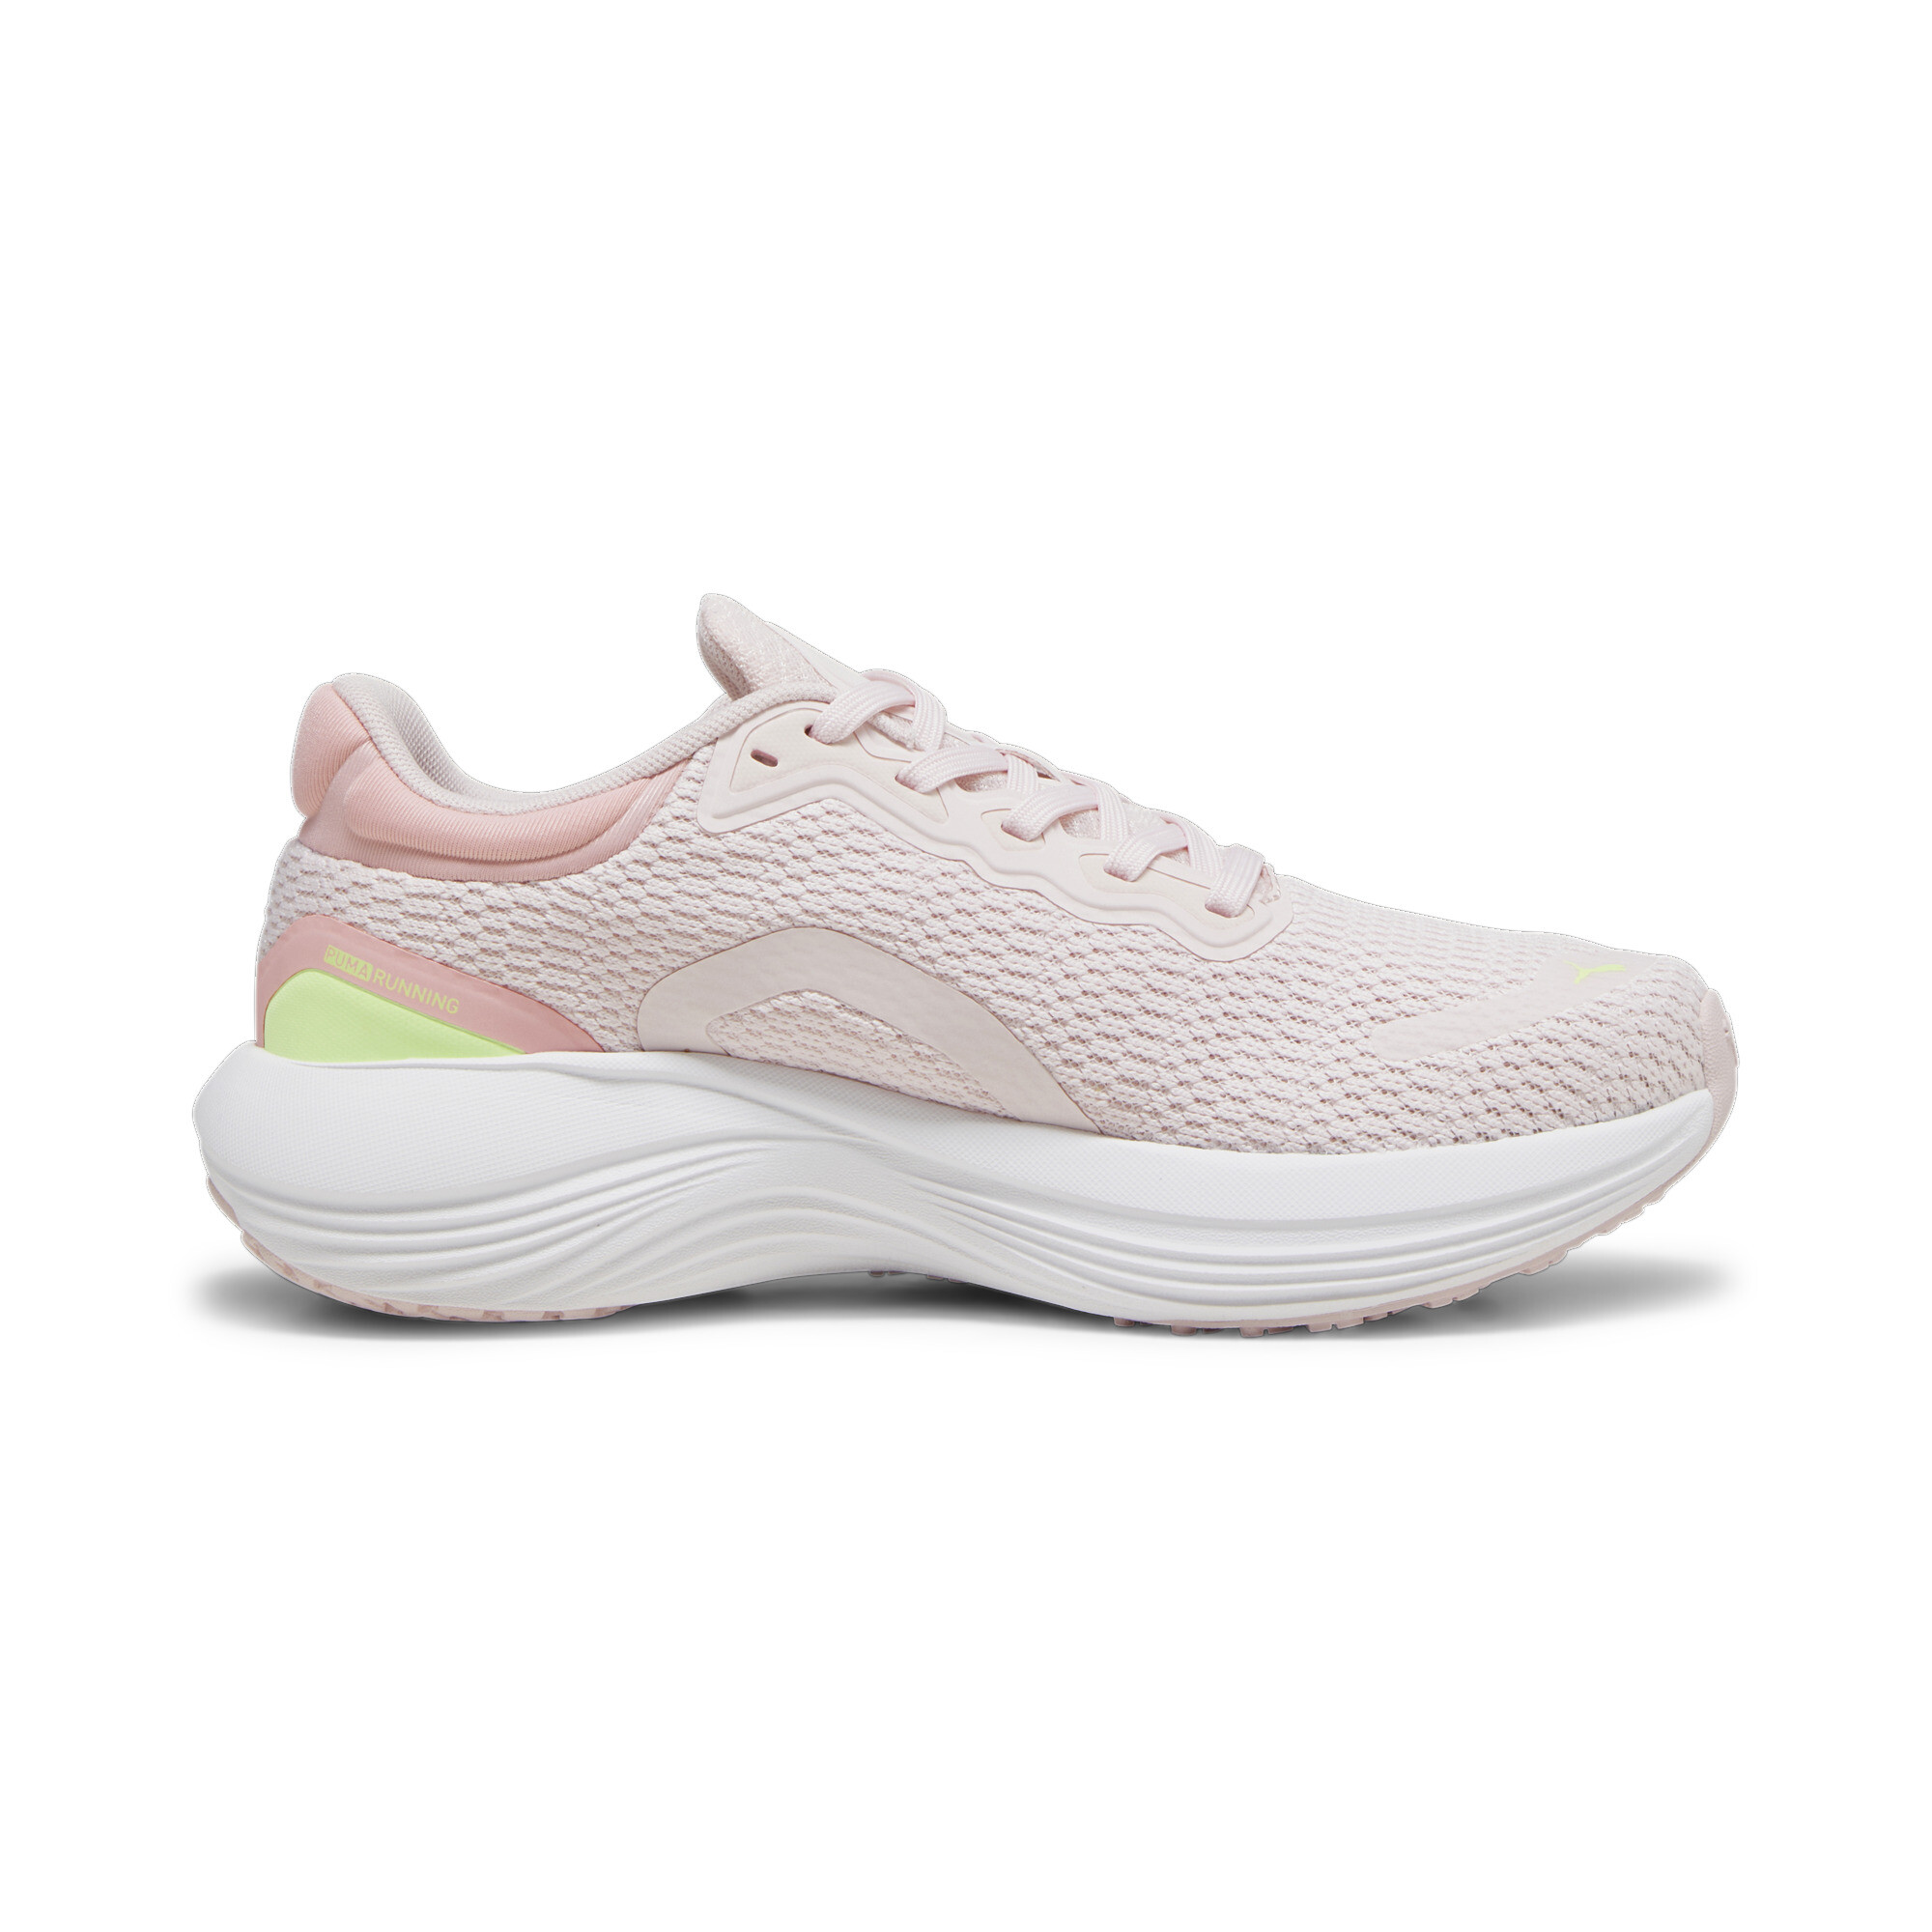 Men's PUMA Scend Pro Running Shoes In Pink, Size EU 38